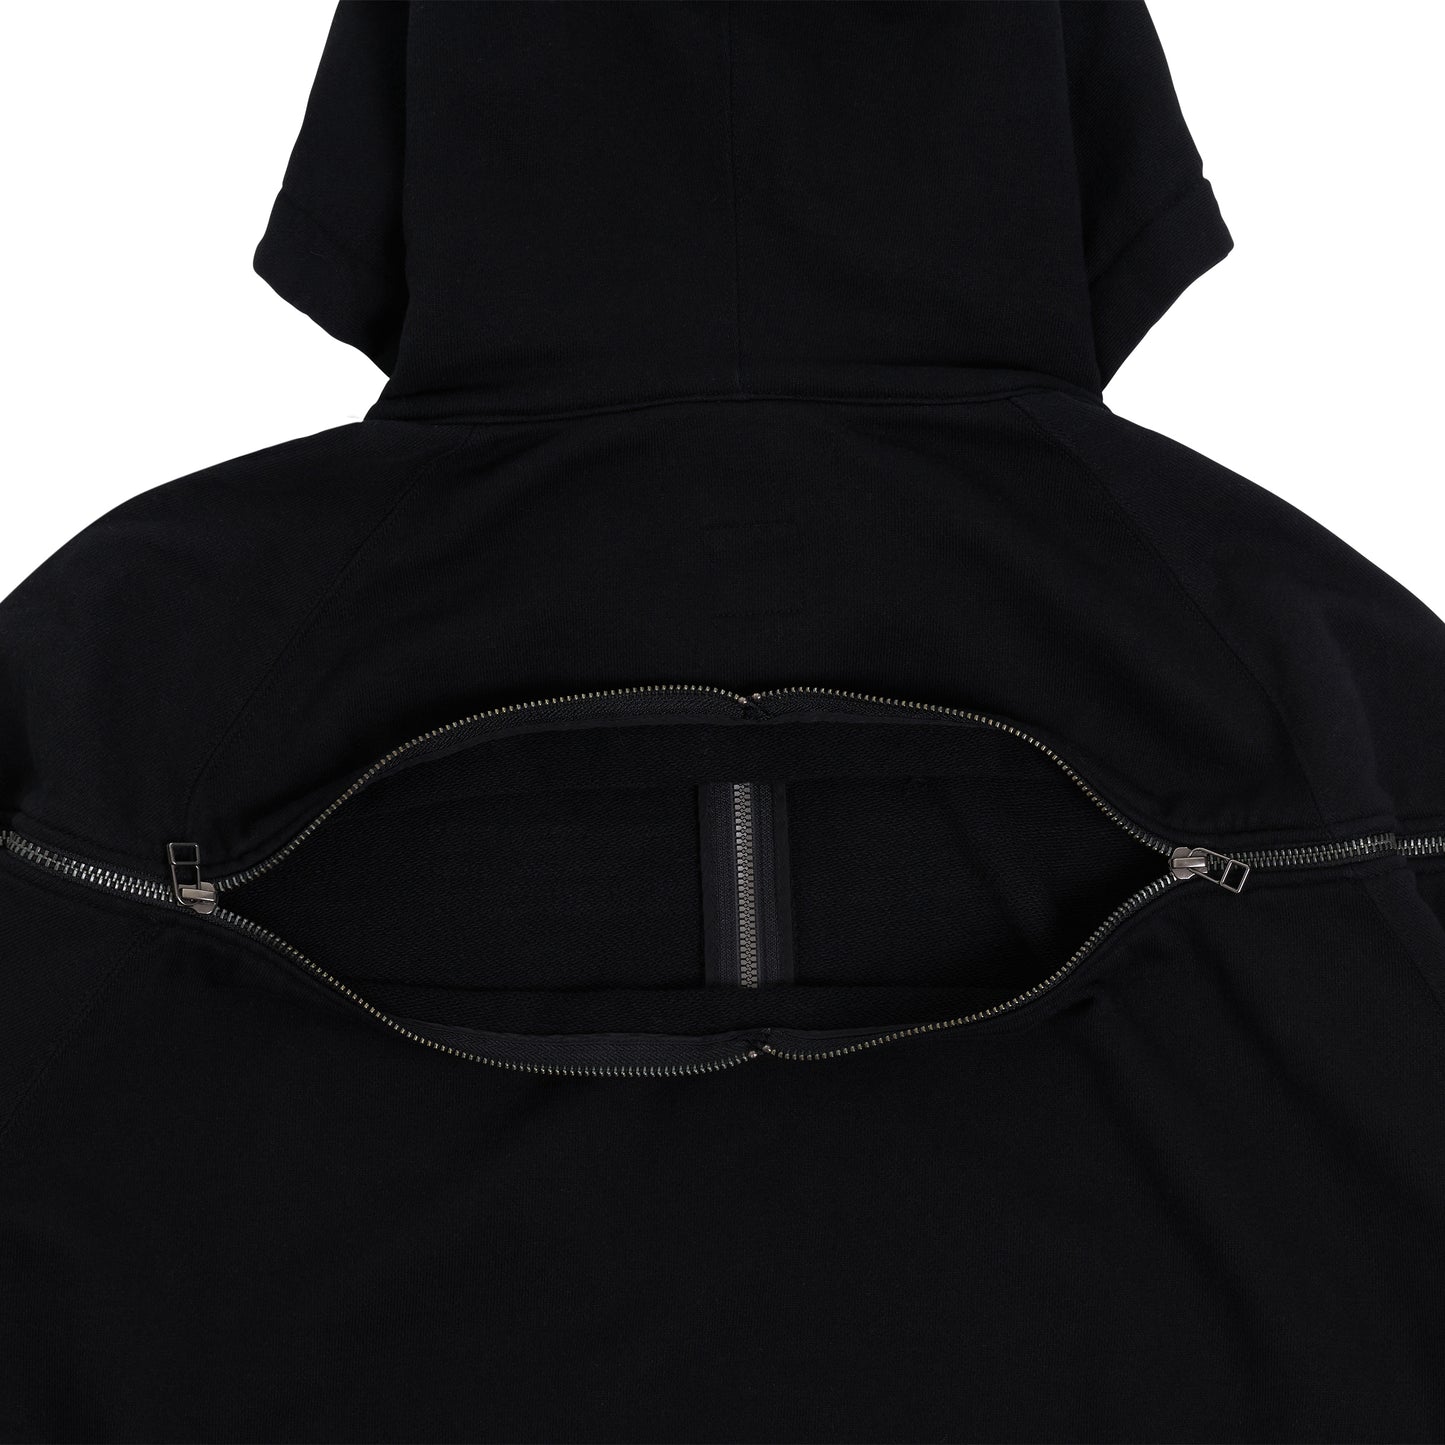 Destroyed Pocket Hoodie with Signature Zip in Black